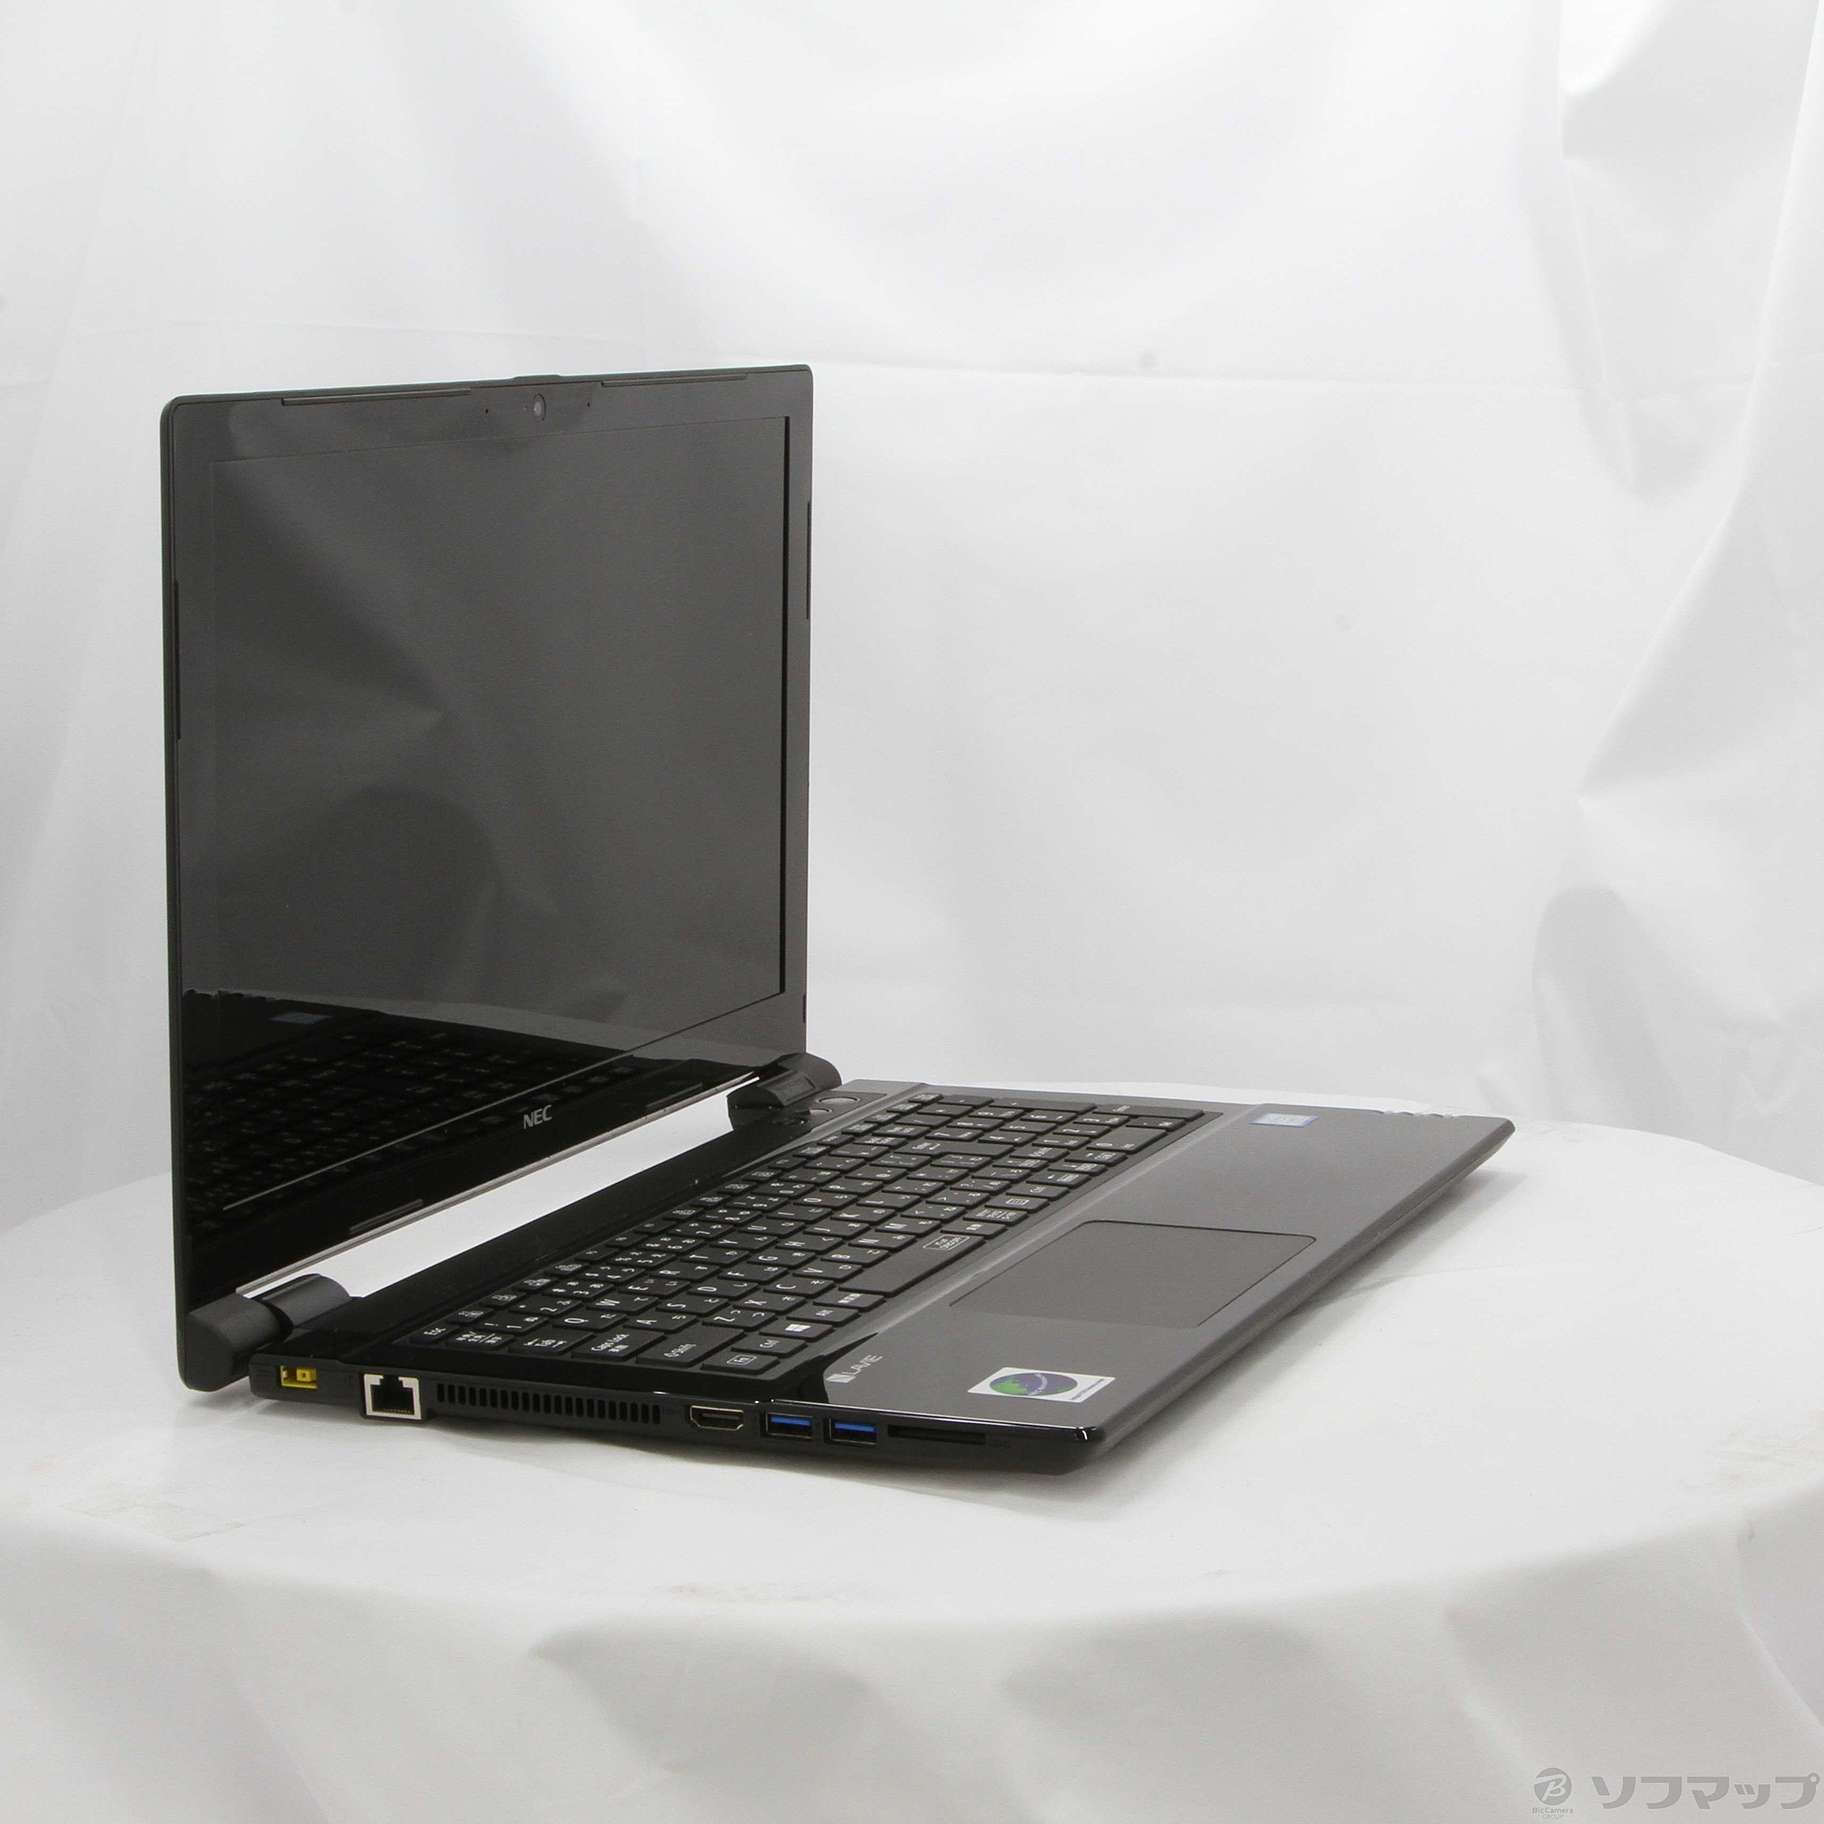 LaVie Note Standard PC-NS700JAB スターリーブラック 〔NEC Refreshed PC〕 〔Windows 10〕  ≪メーカー保証あり≫